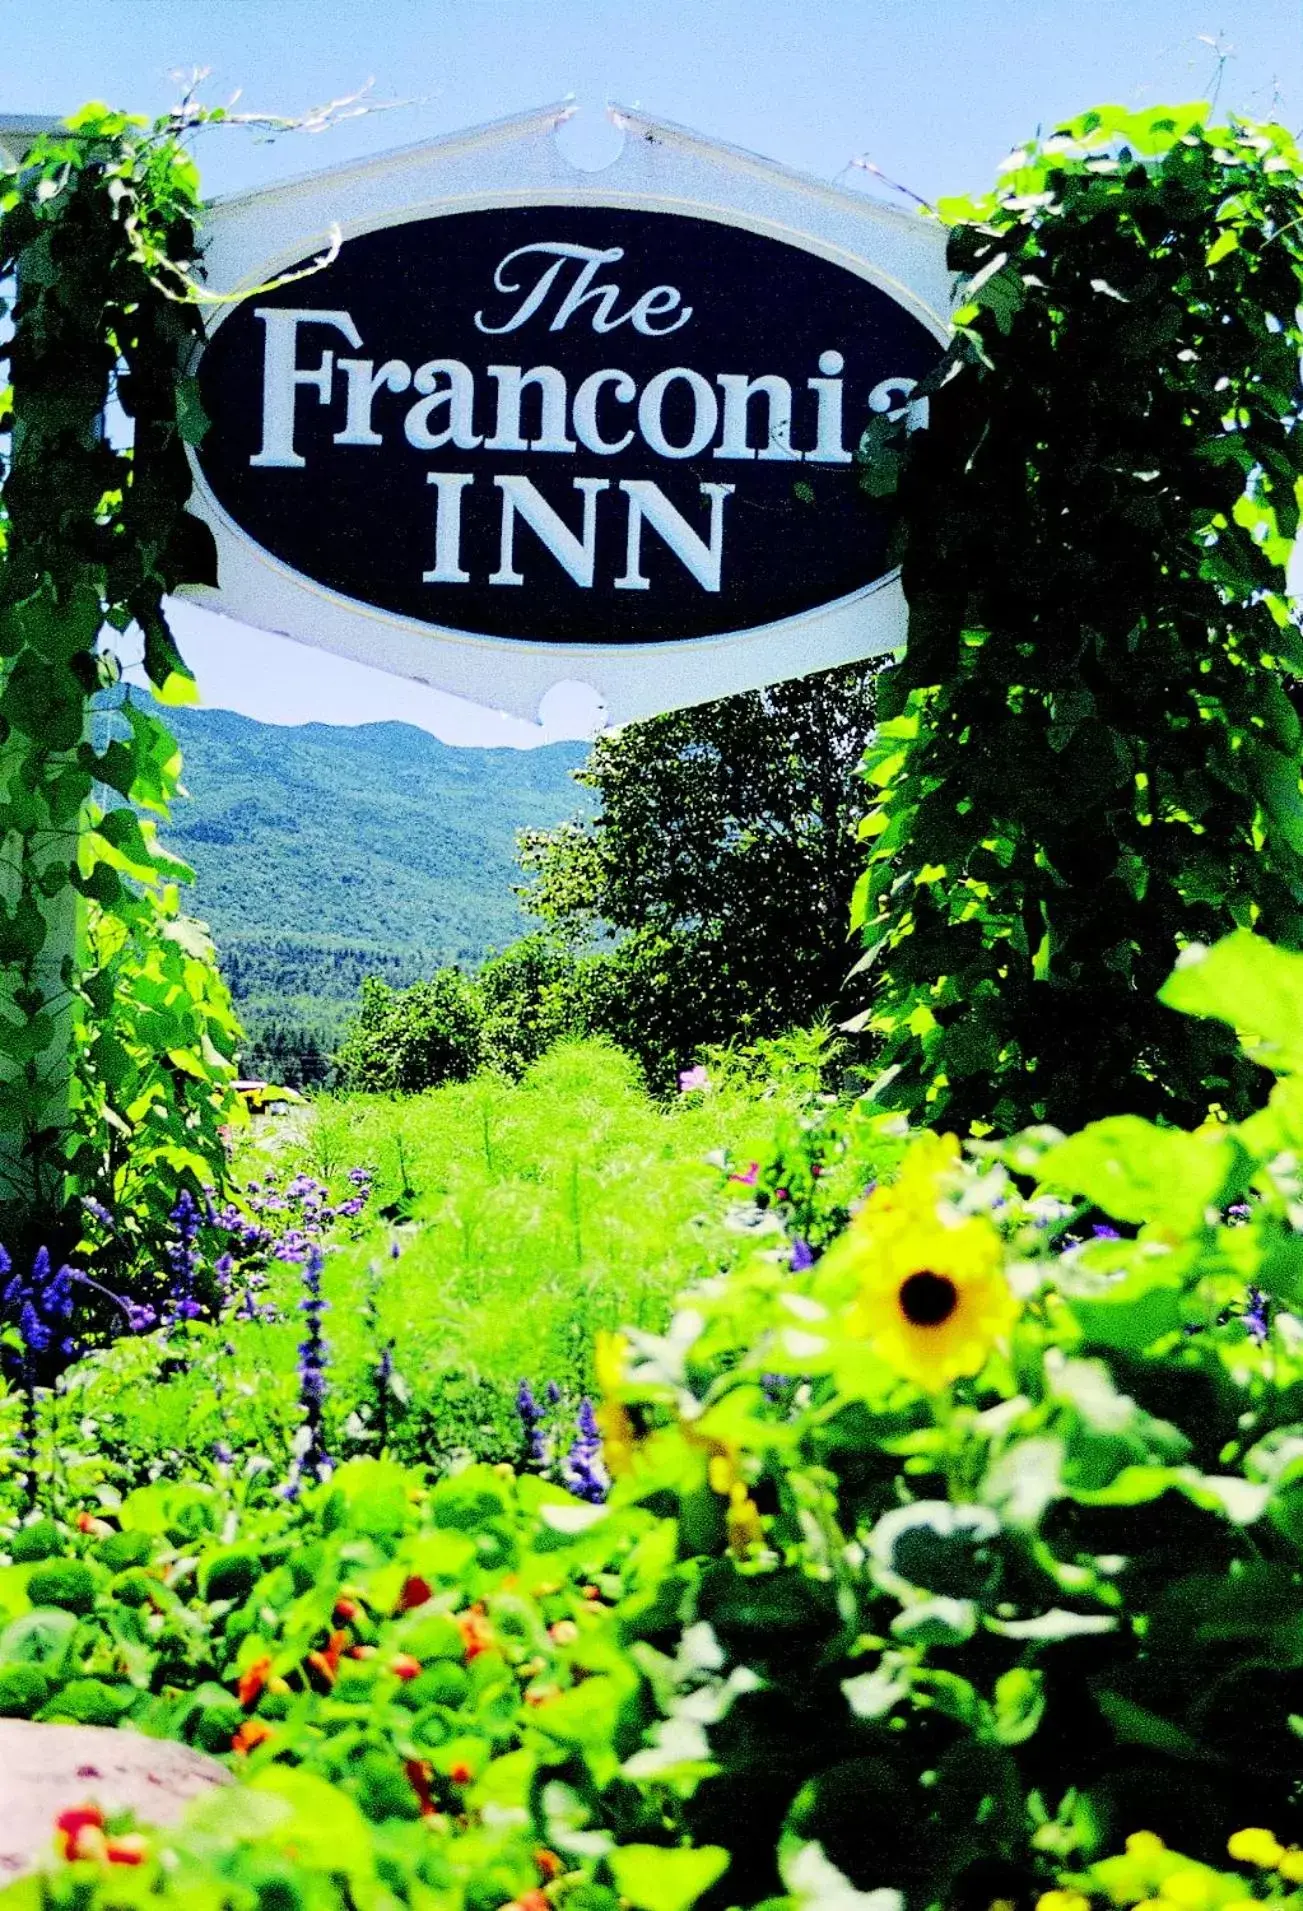 Property logo or sign in Franconia Inn